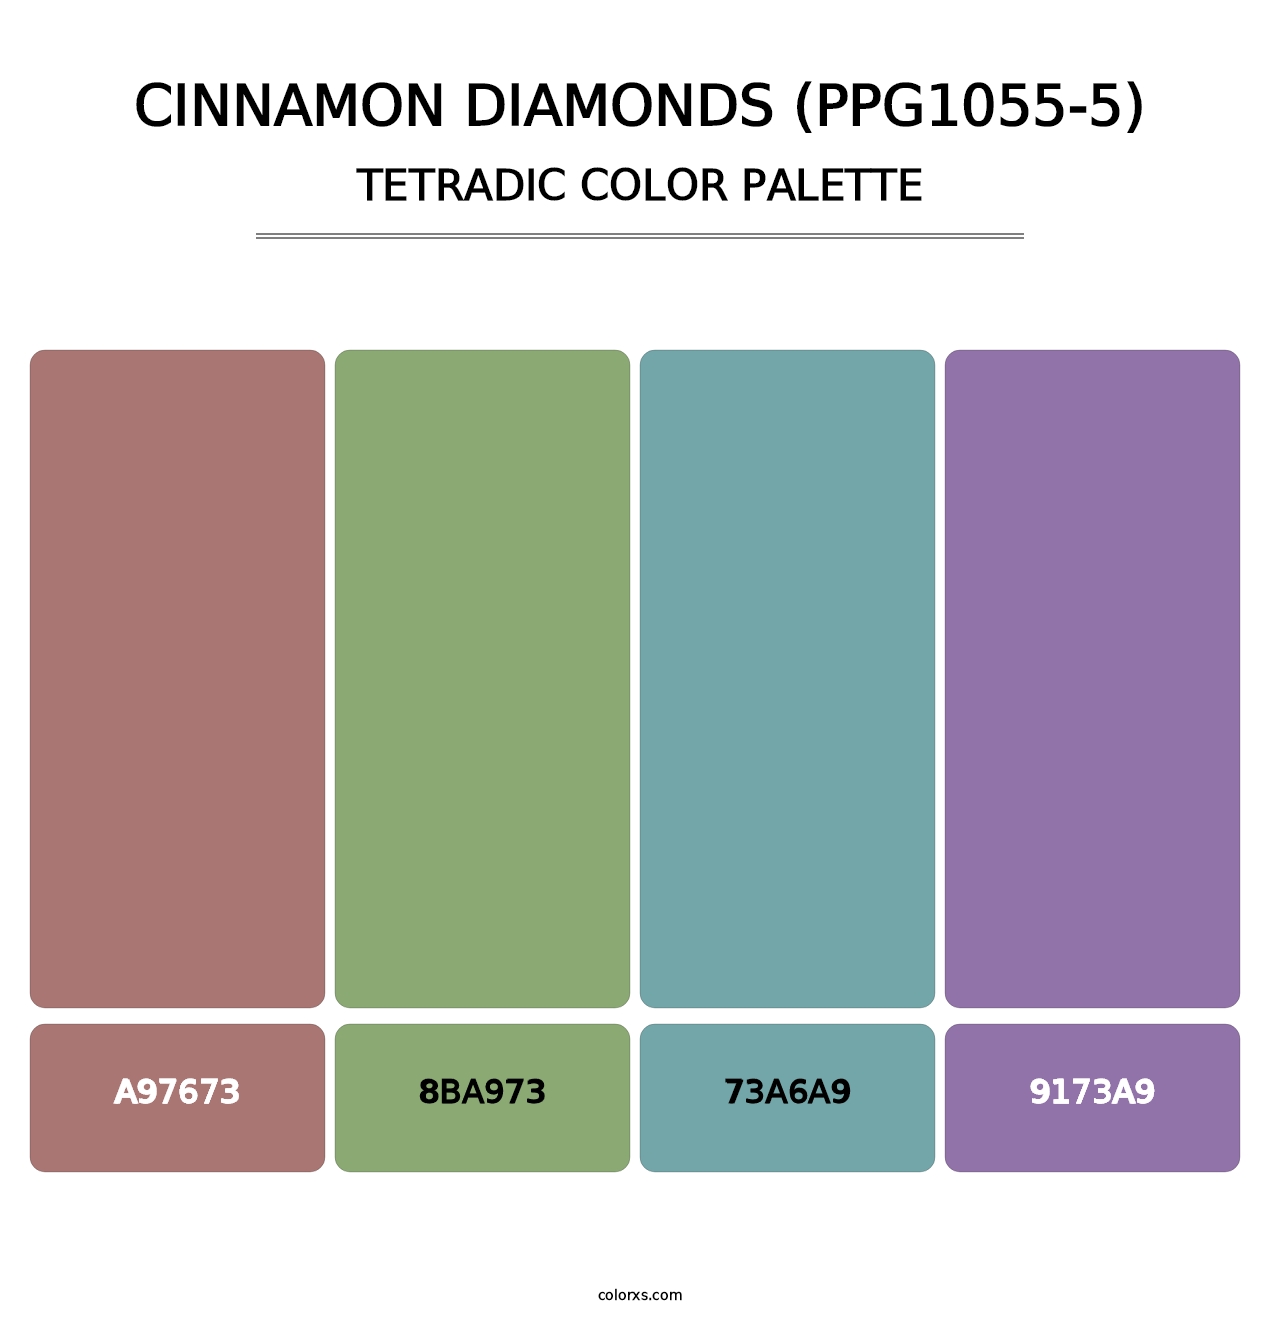 Cinnamon Diamonds (PPG1055-5) - Tetradic Color Palette